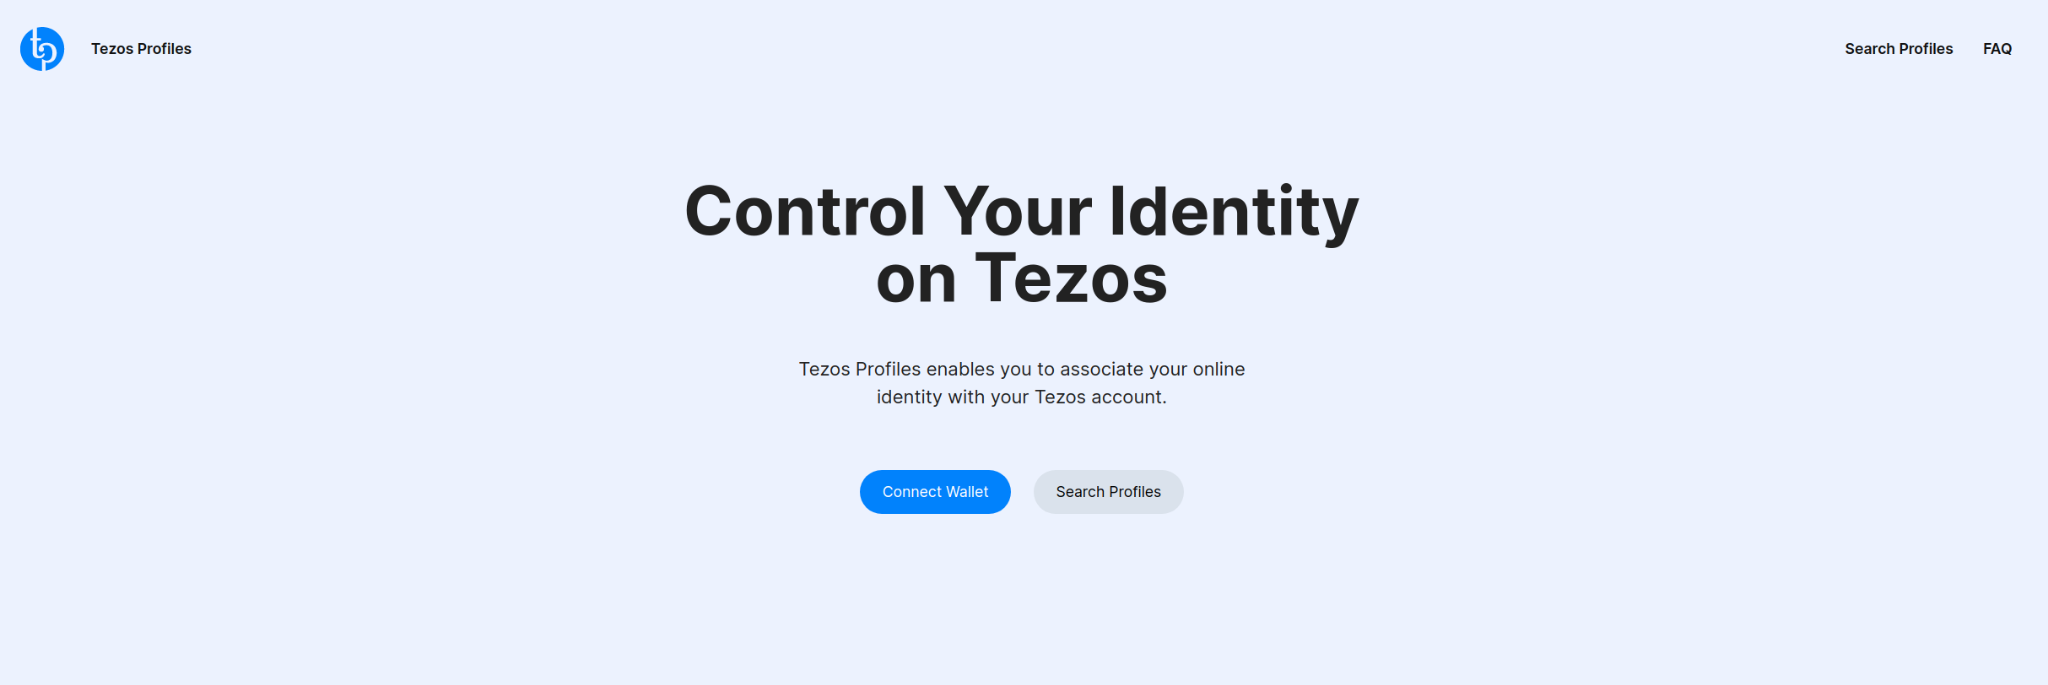 Tezos Profiles homepage